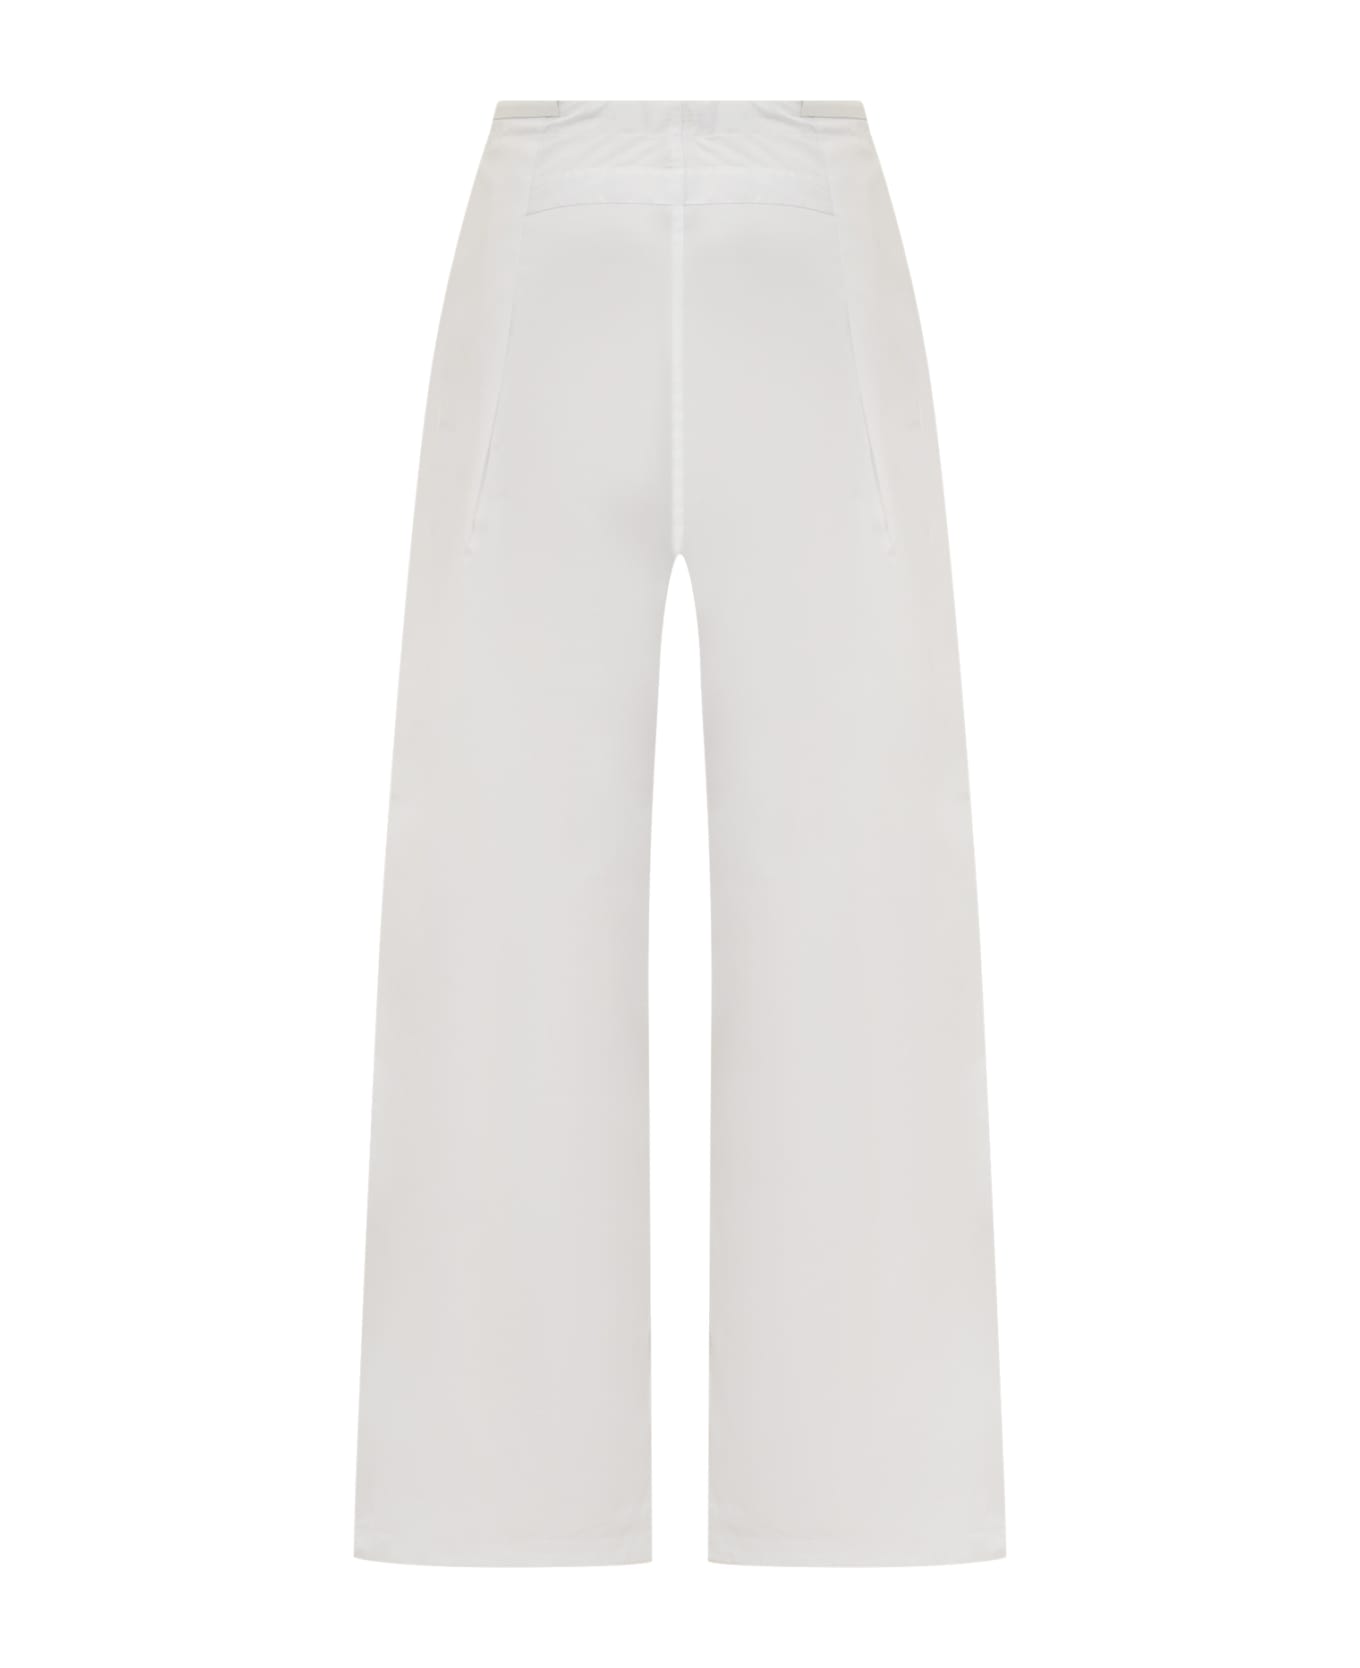 DARKPARK Daisy Milit Trousers - WHITE